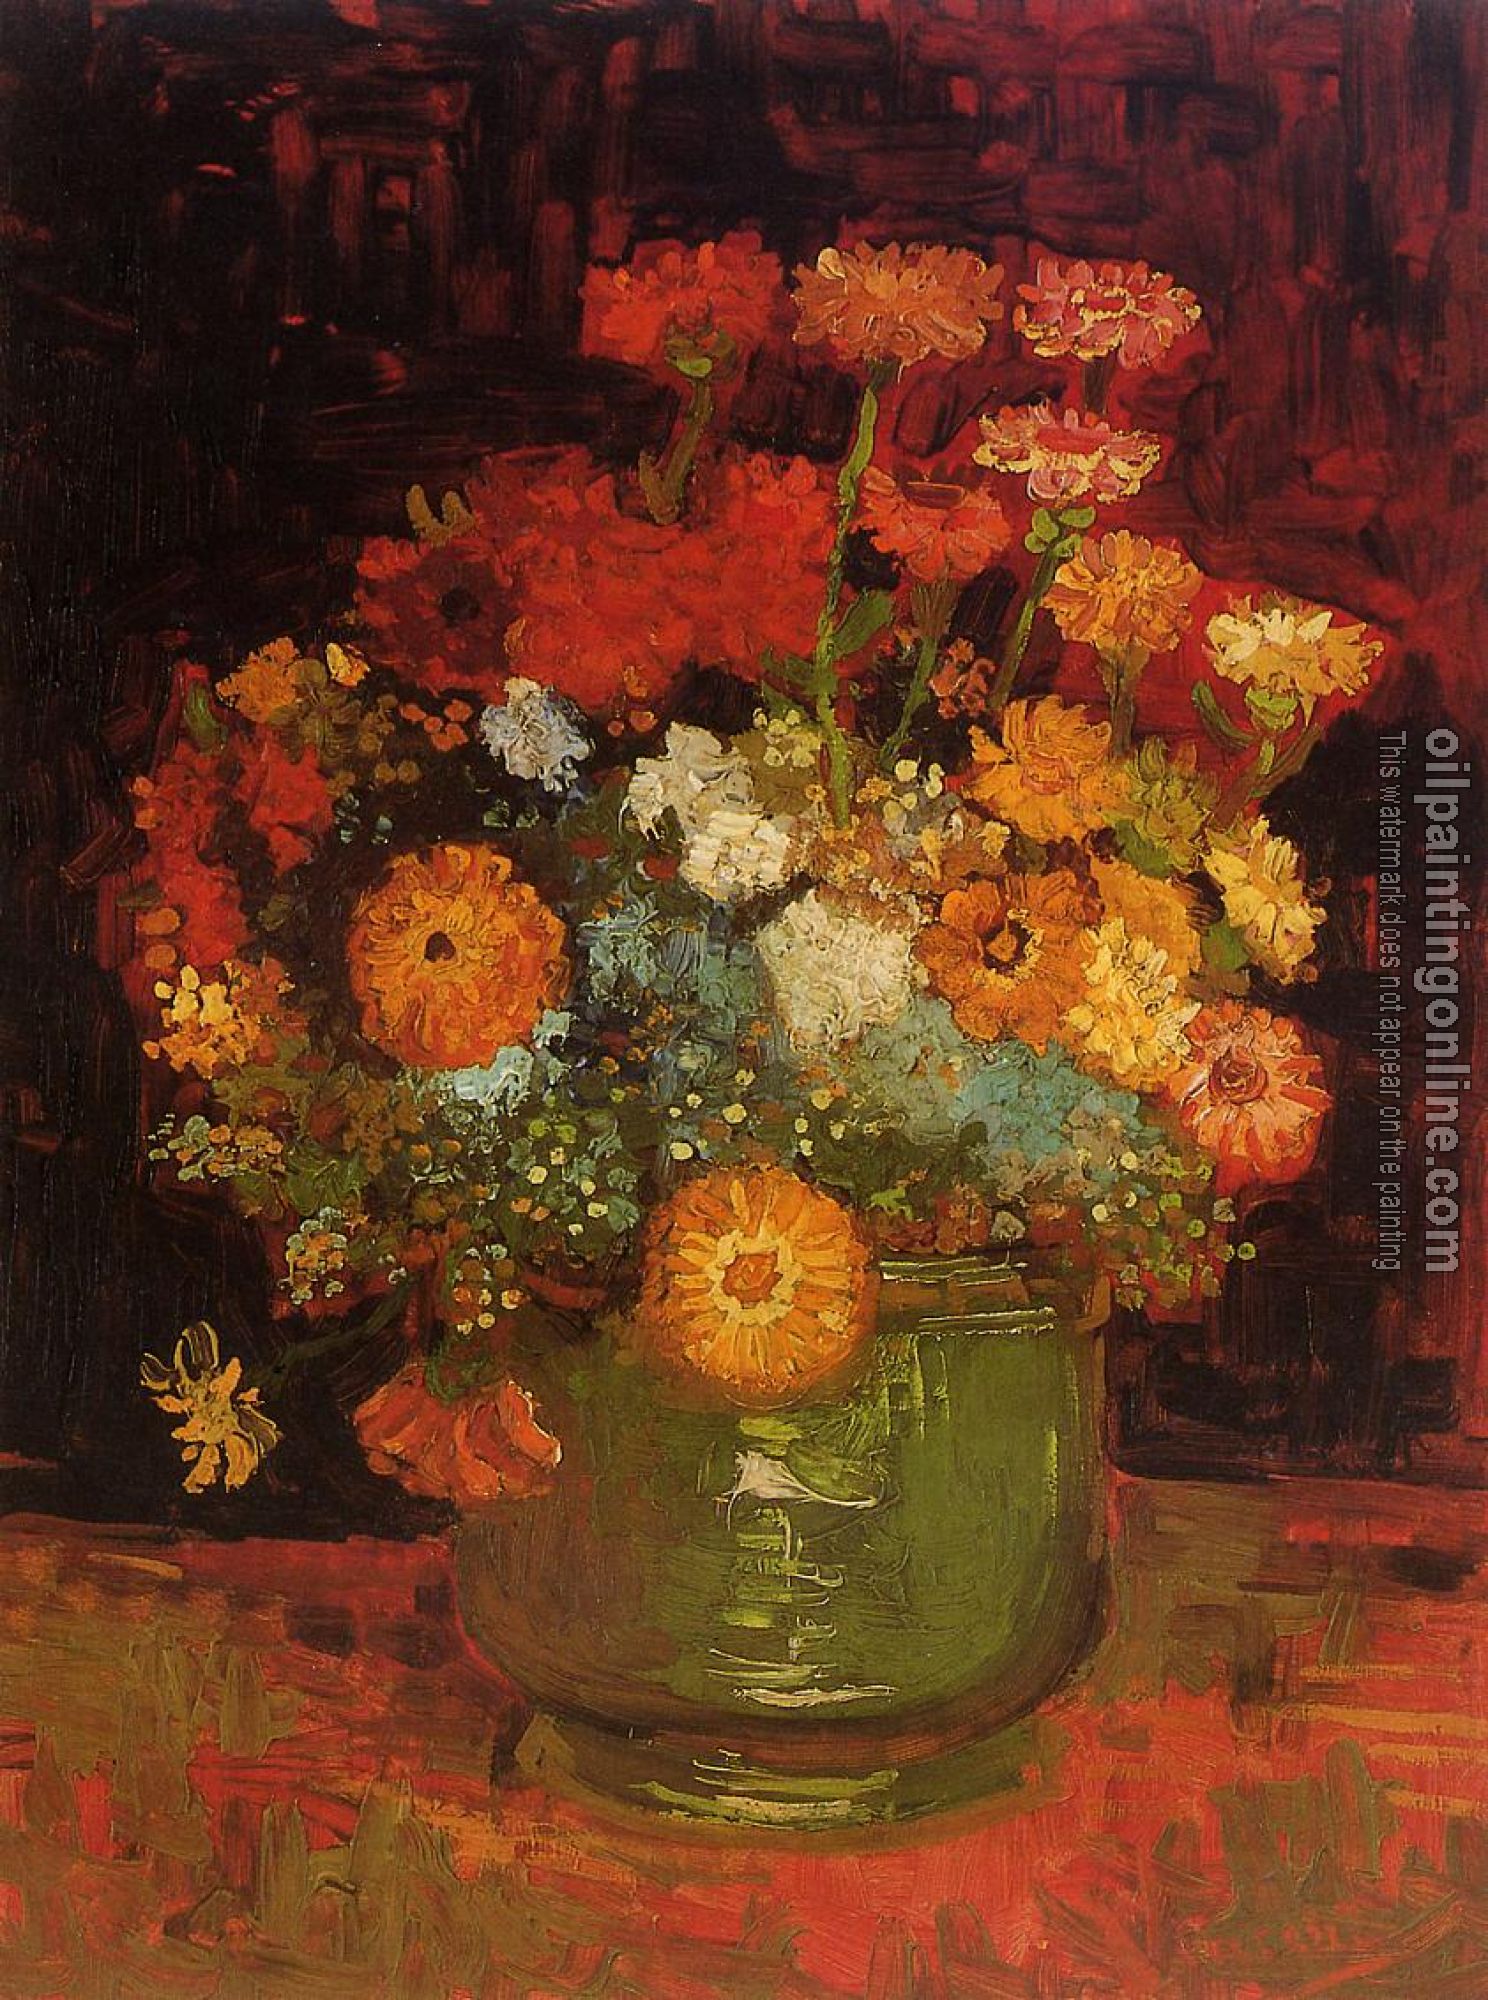 Gogh, Vincent van - Vase with Zinnias